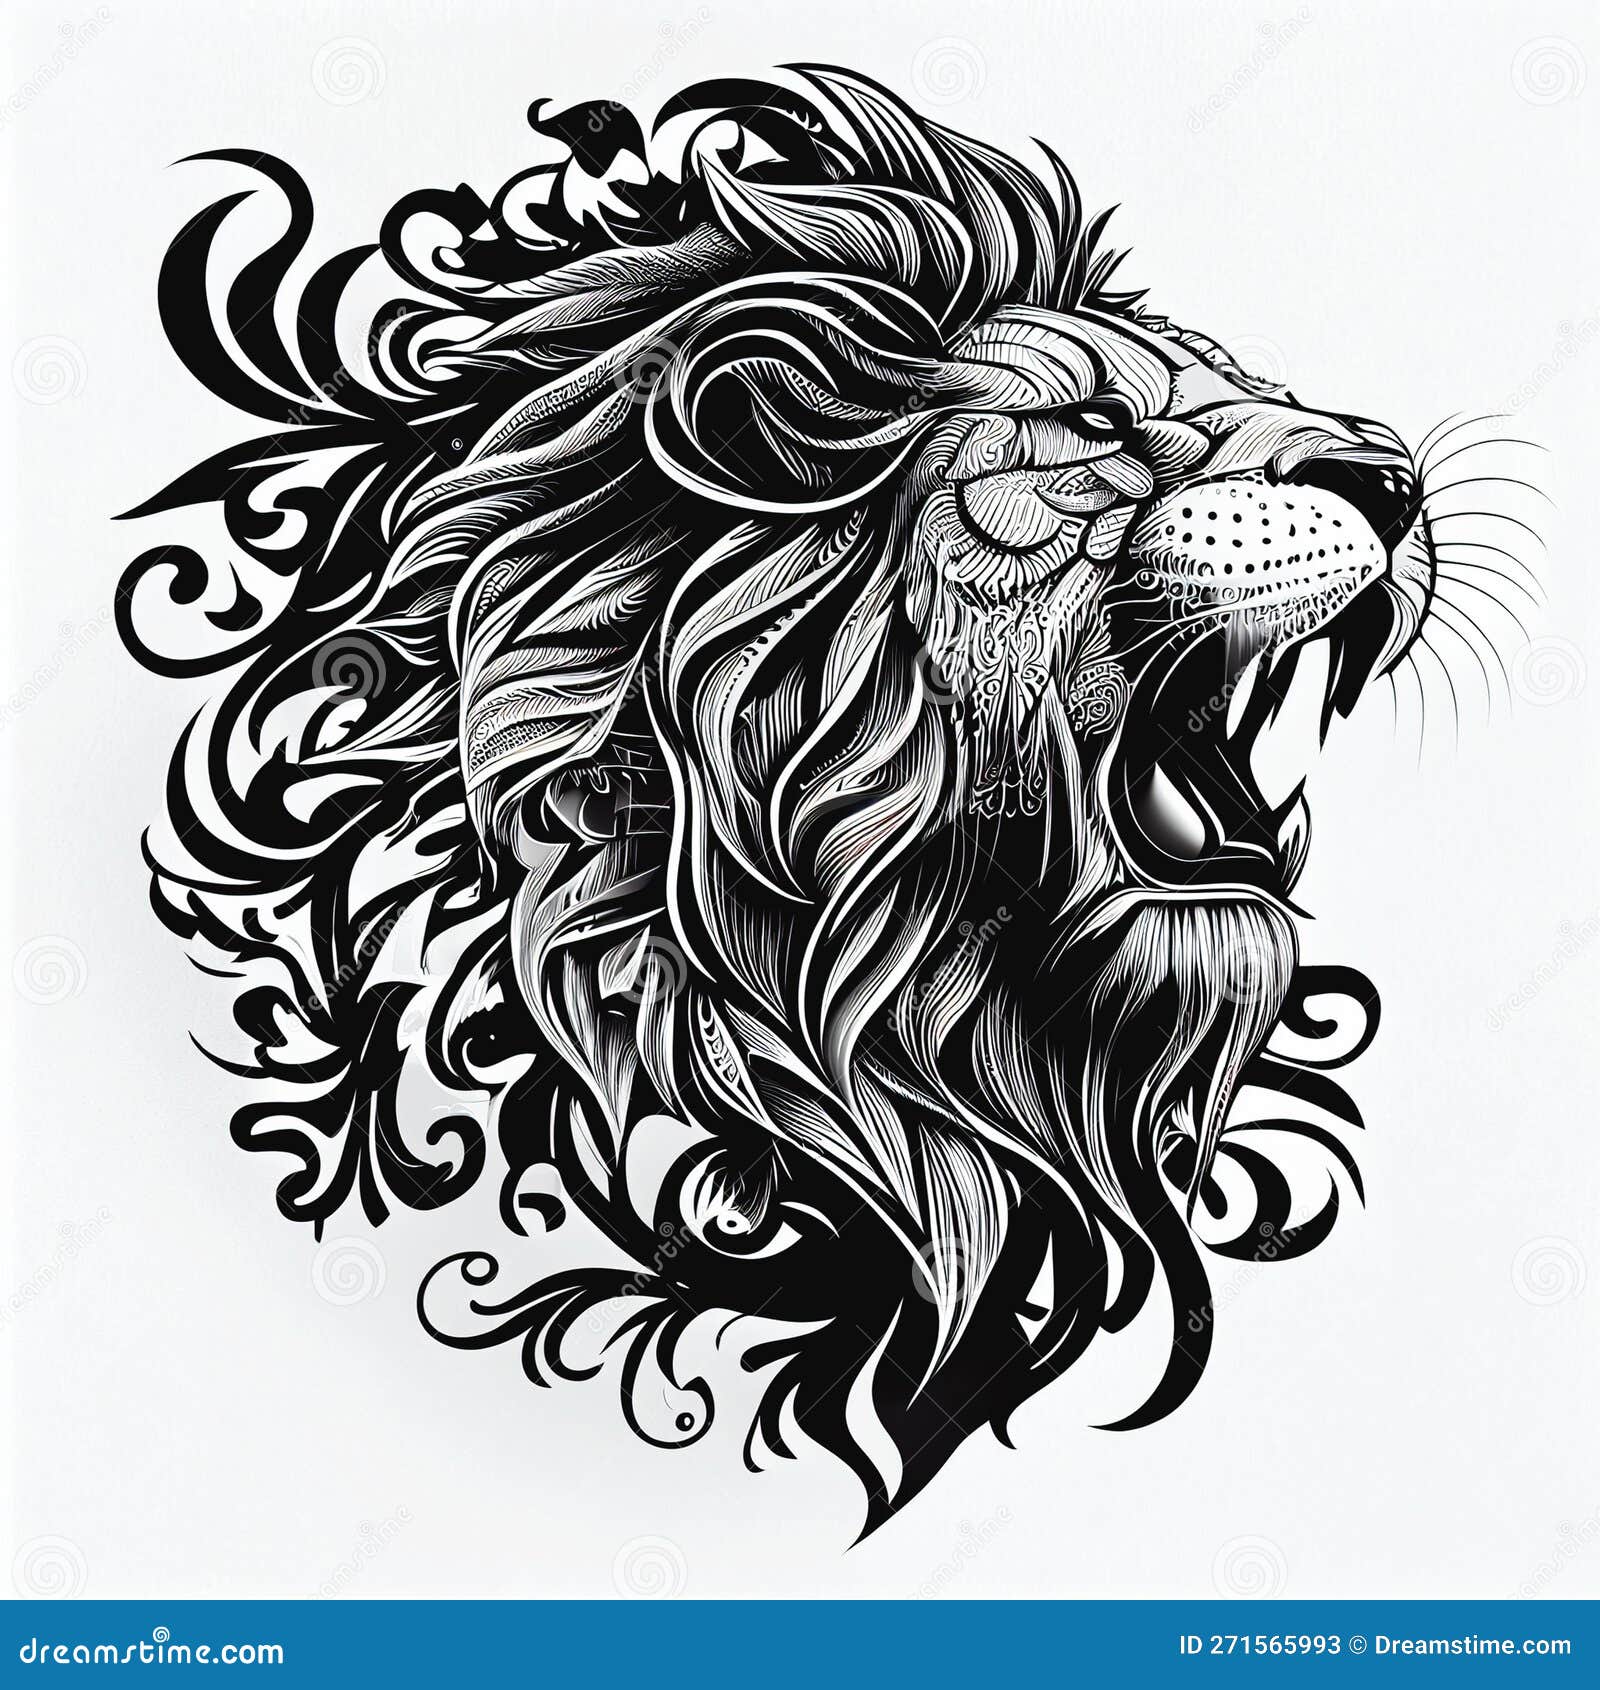 lion tattoo 1 by agaricgreywolf on DeviantArt